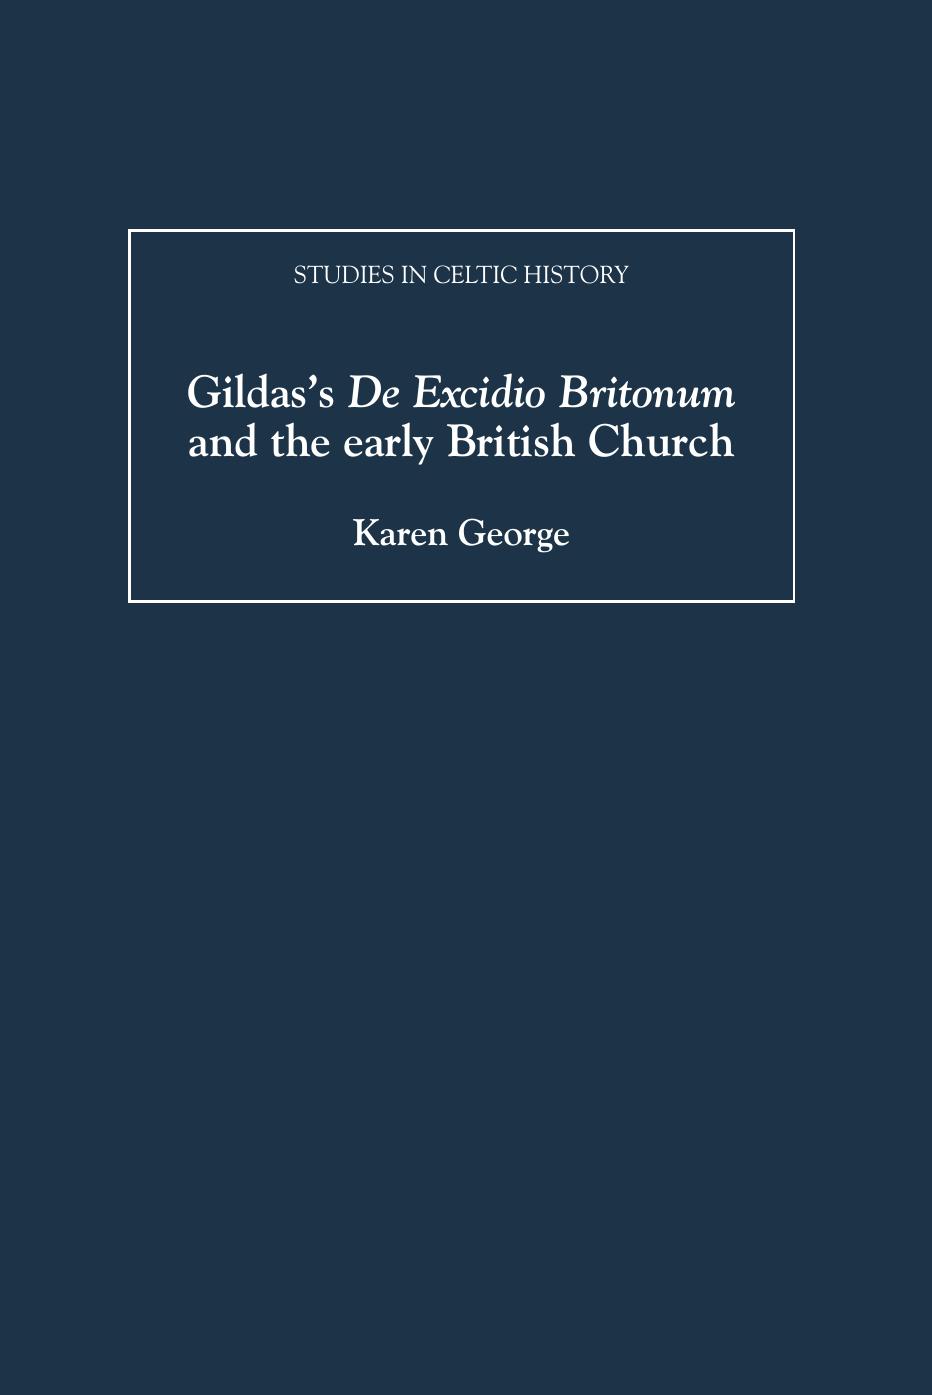 Gildas's "De Excidio Britonum" and the Early British Church by Karen George